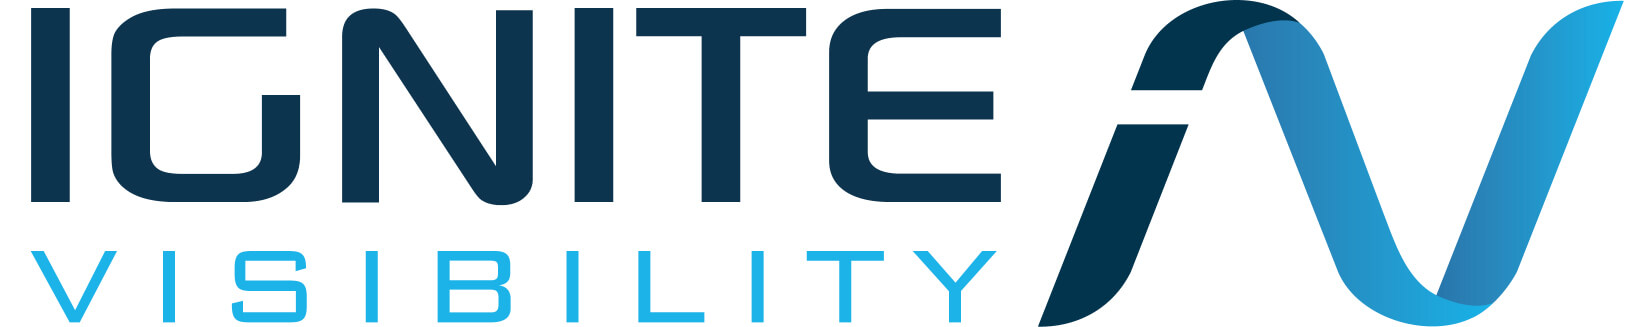 San Diego Top San Diego PPC Company Logo: Ignite Visibility